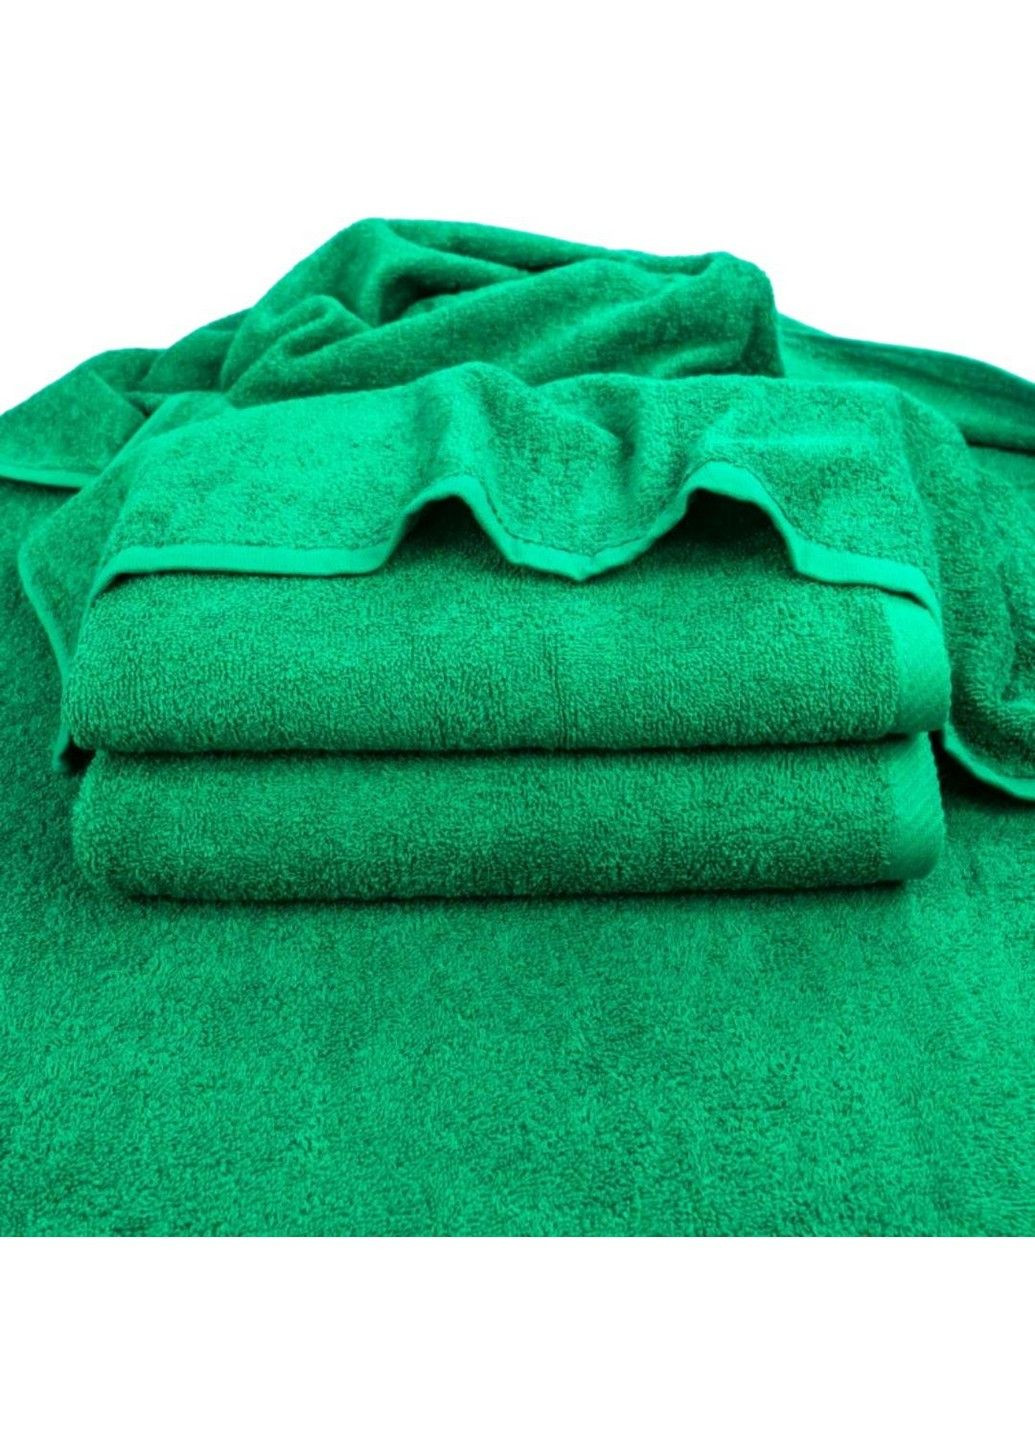 GM Textile полотенце махровое, 70*140 см зеленый производство - Узбекистан